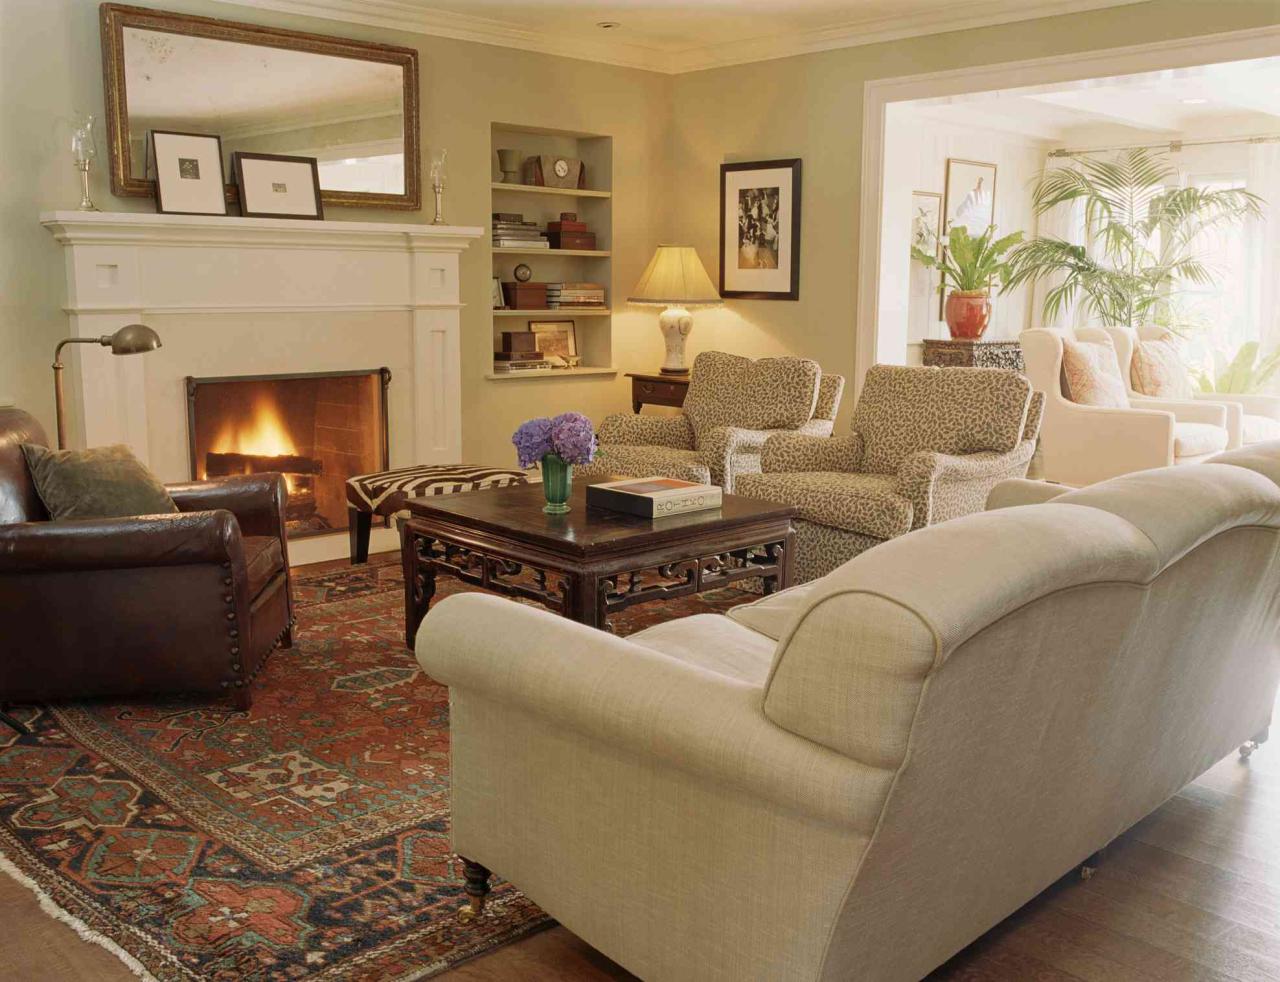 Traditional living room sets sofa furniture decor set interior tuscan leather badcock rooms dreena sofas elegant style brown decorating designs